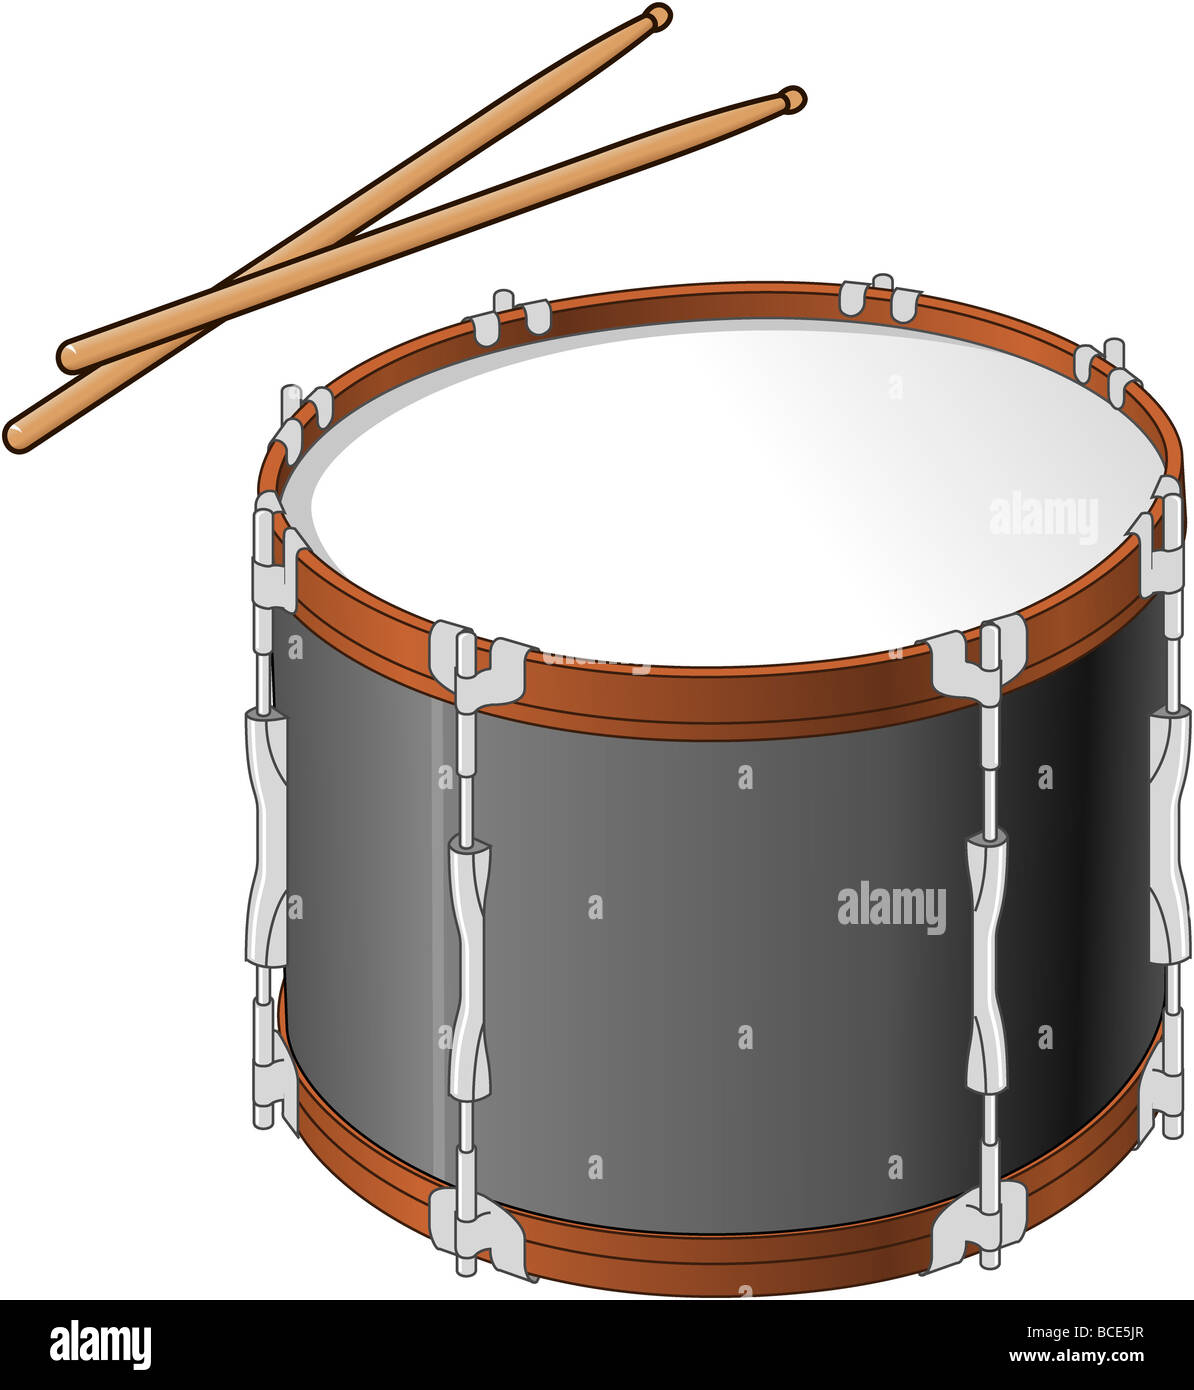 Tenor drum and drumsticks. Stock Photo